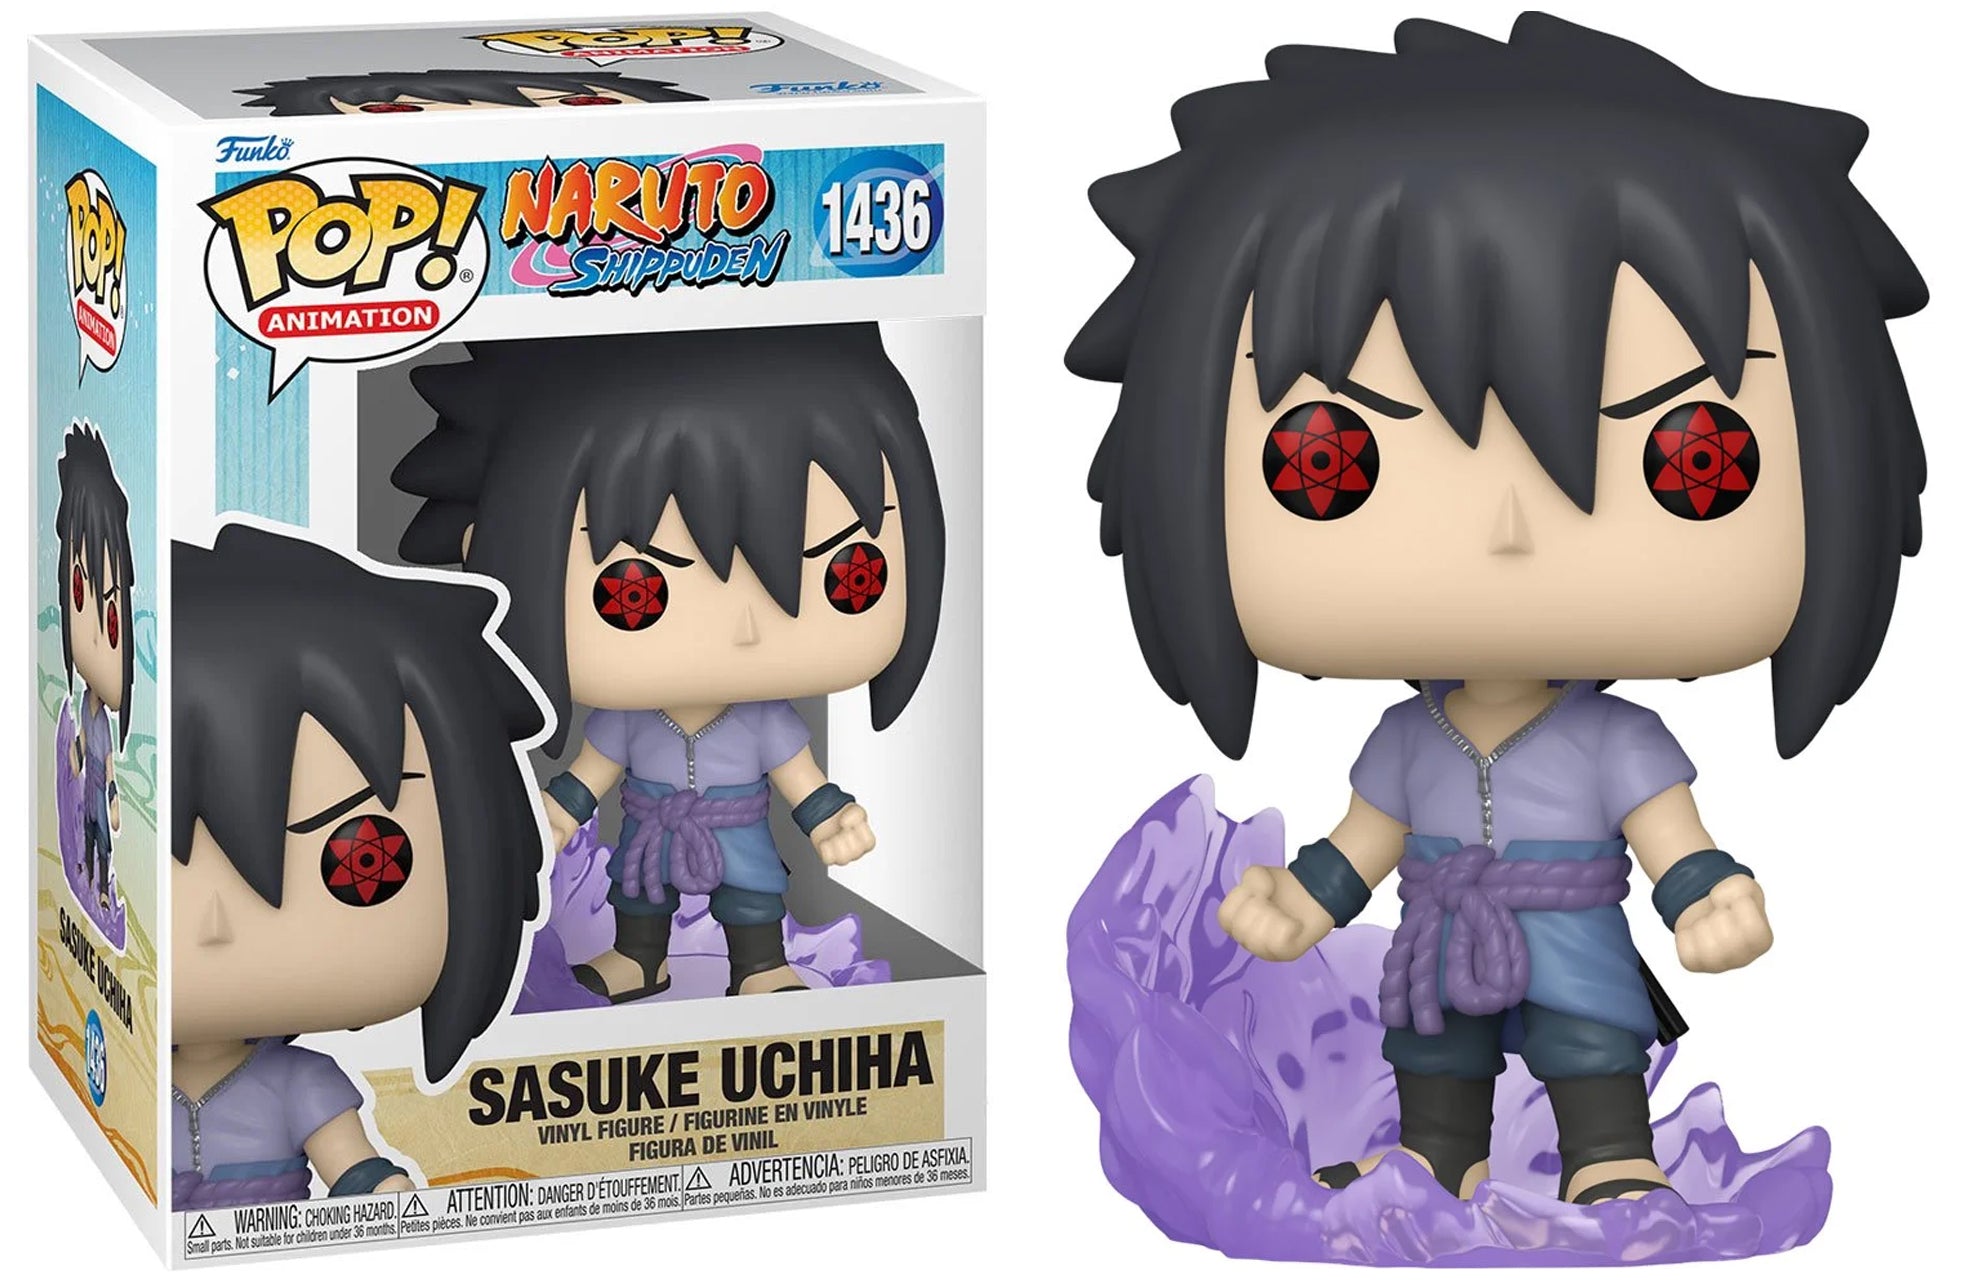 Naruto nsp: Sasuke Uchiha